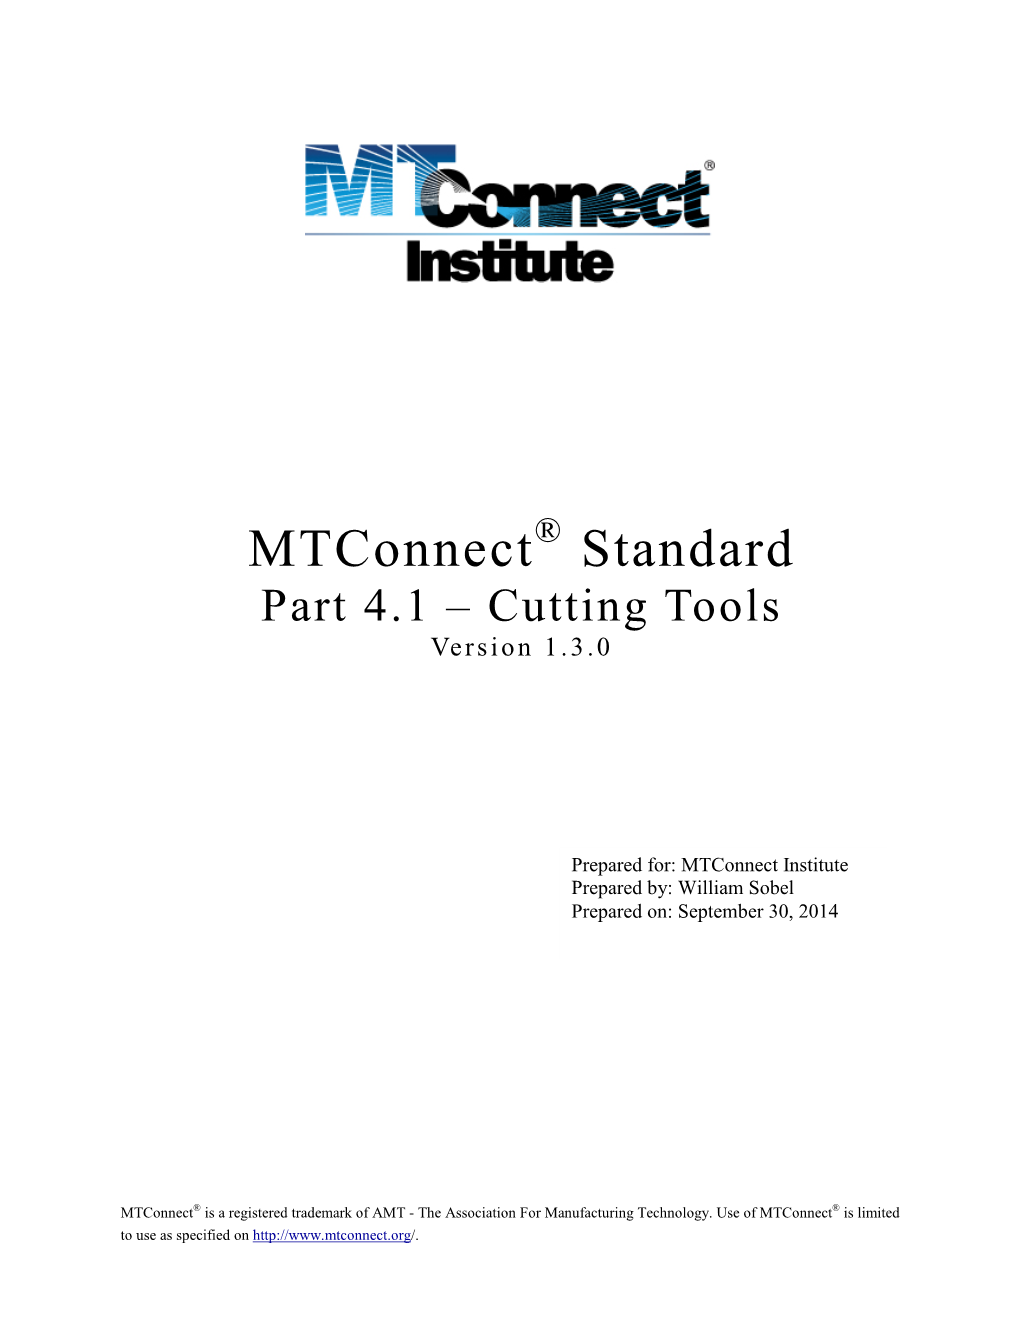 C. Cutting Tool Example